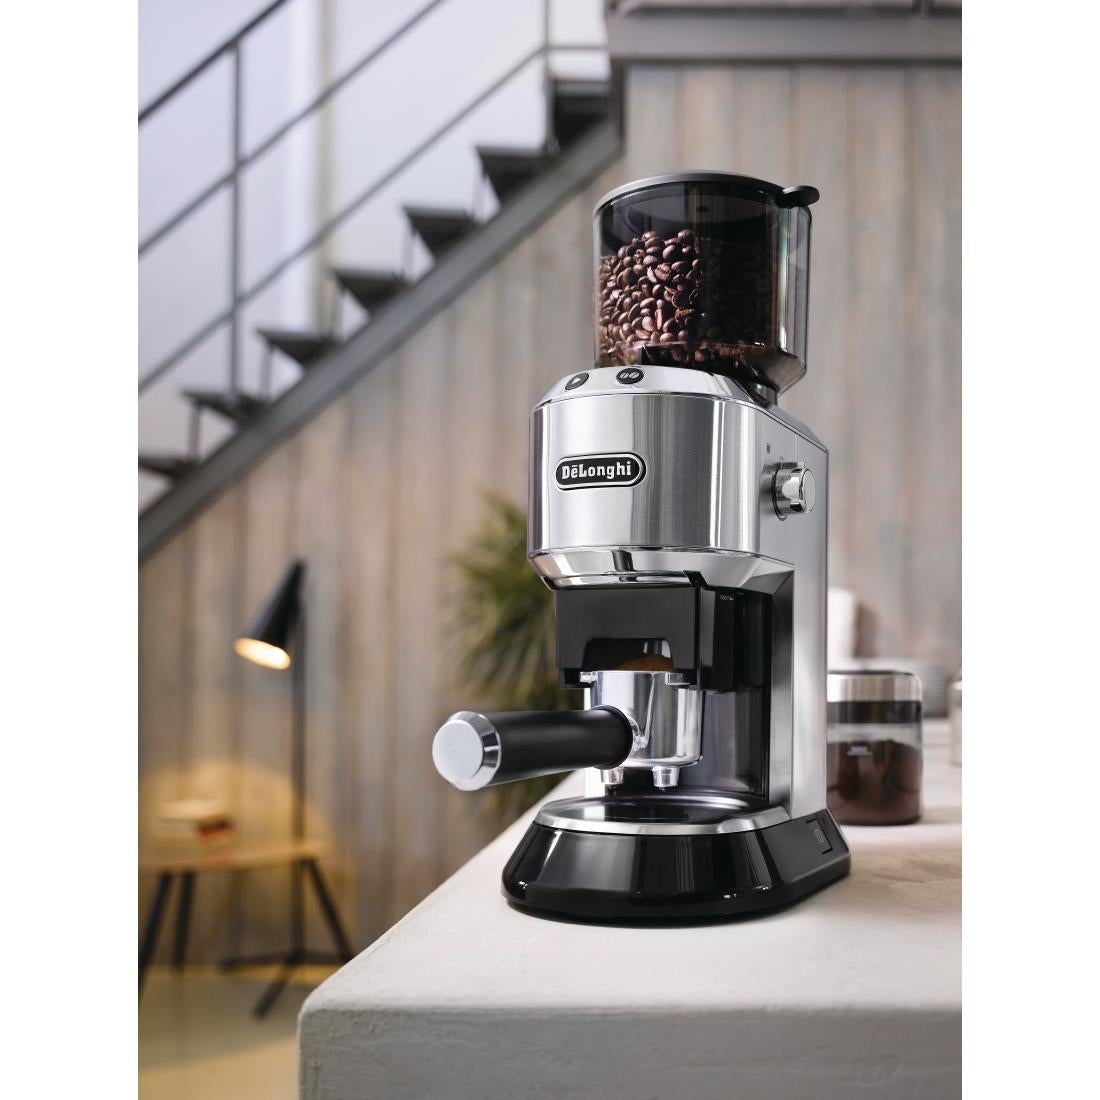 FS139 DeLonghi Coffee Bean Grinder KG521 JD Catering Equipment Solutions Ltd